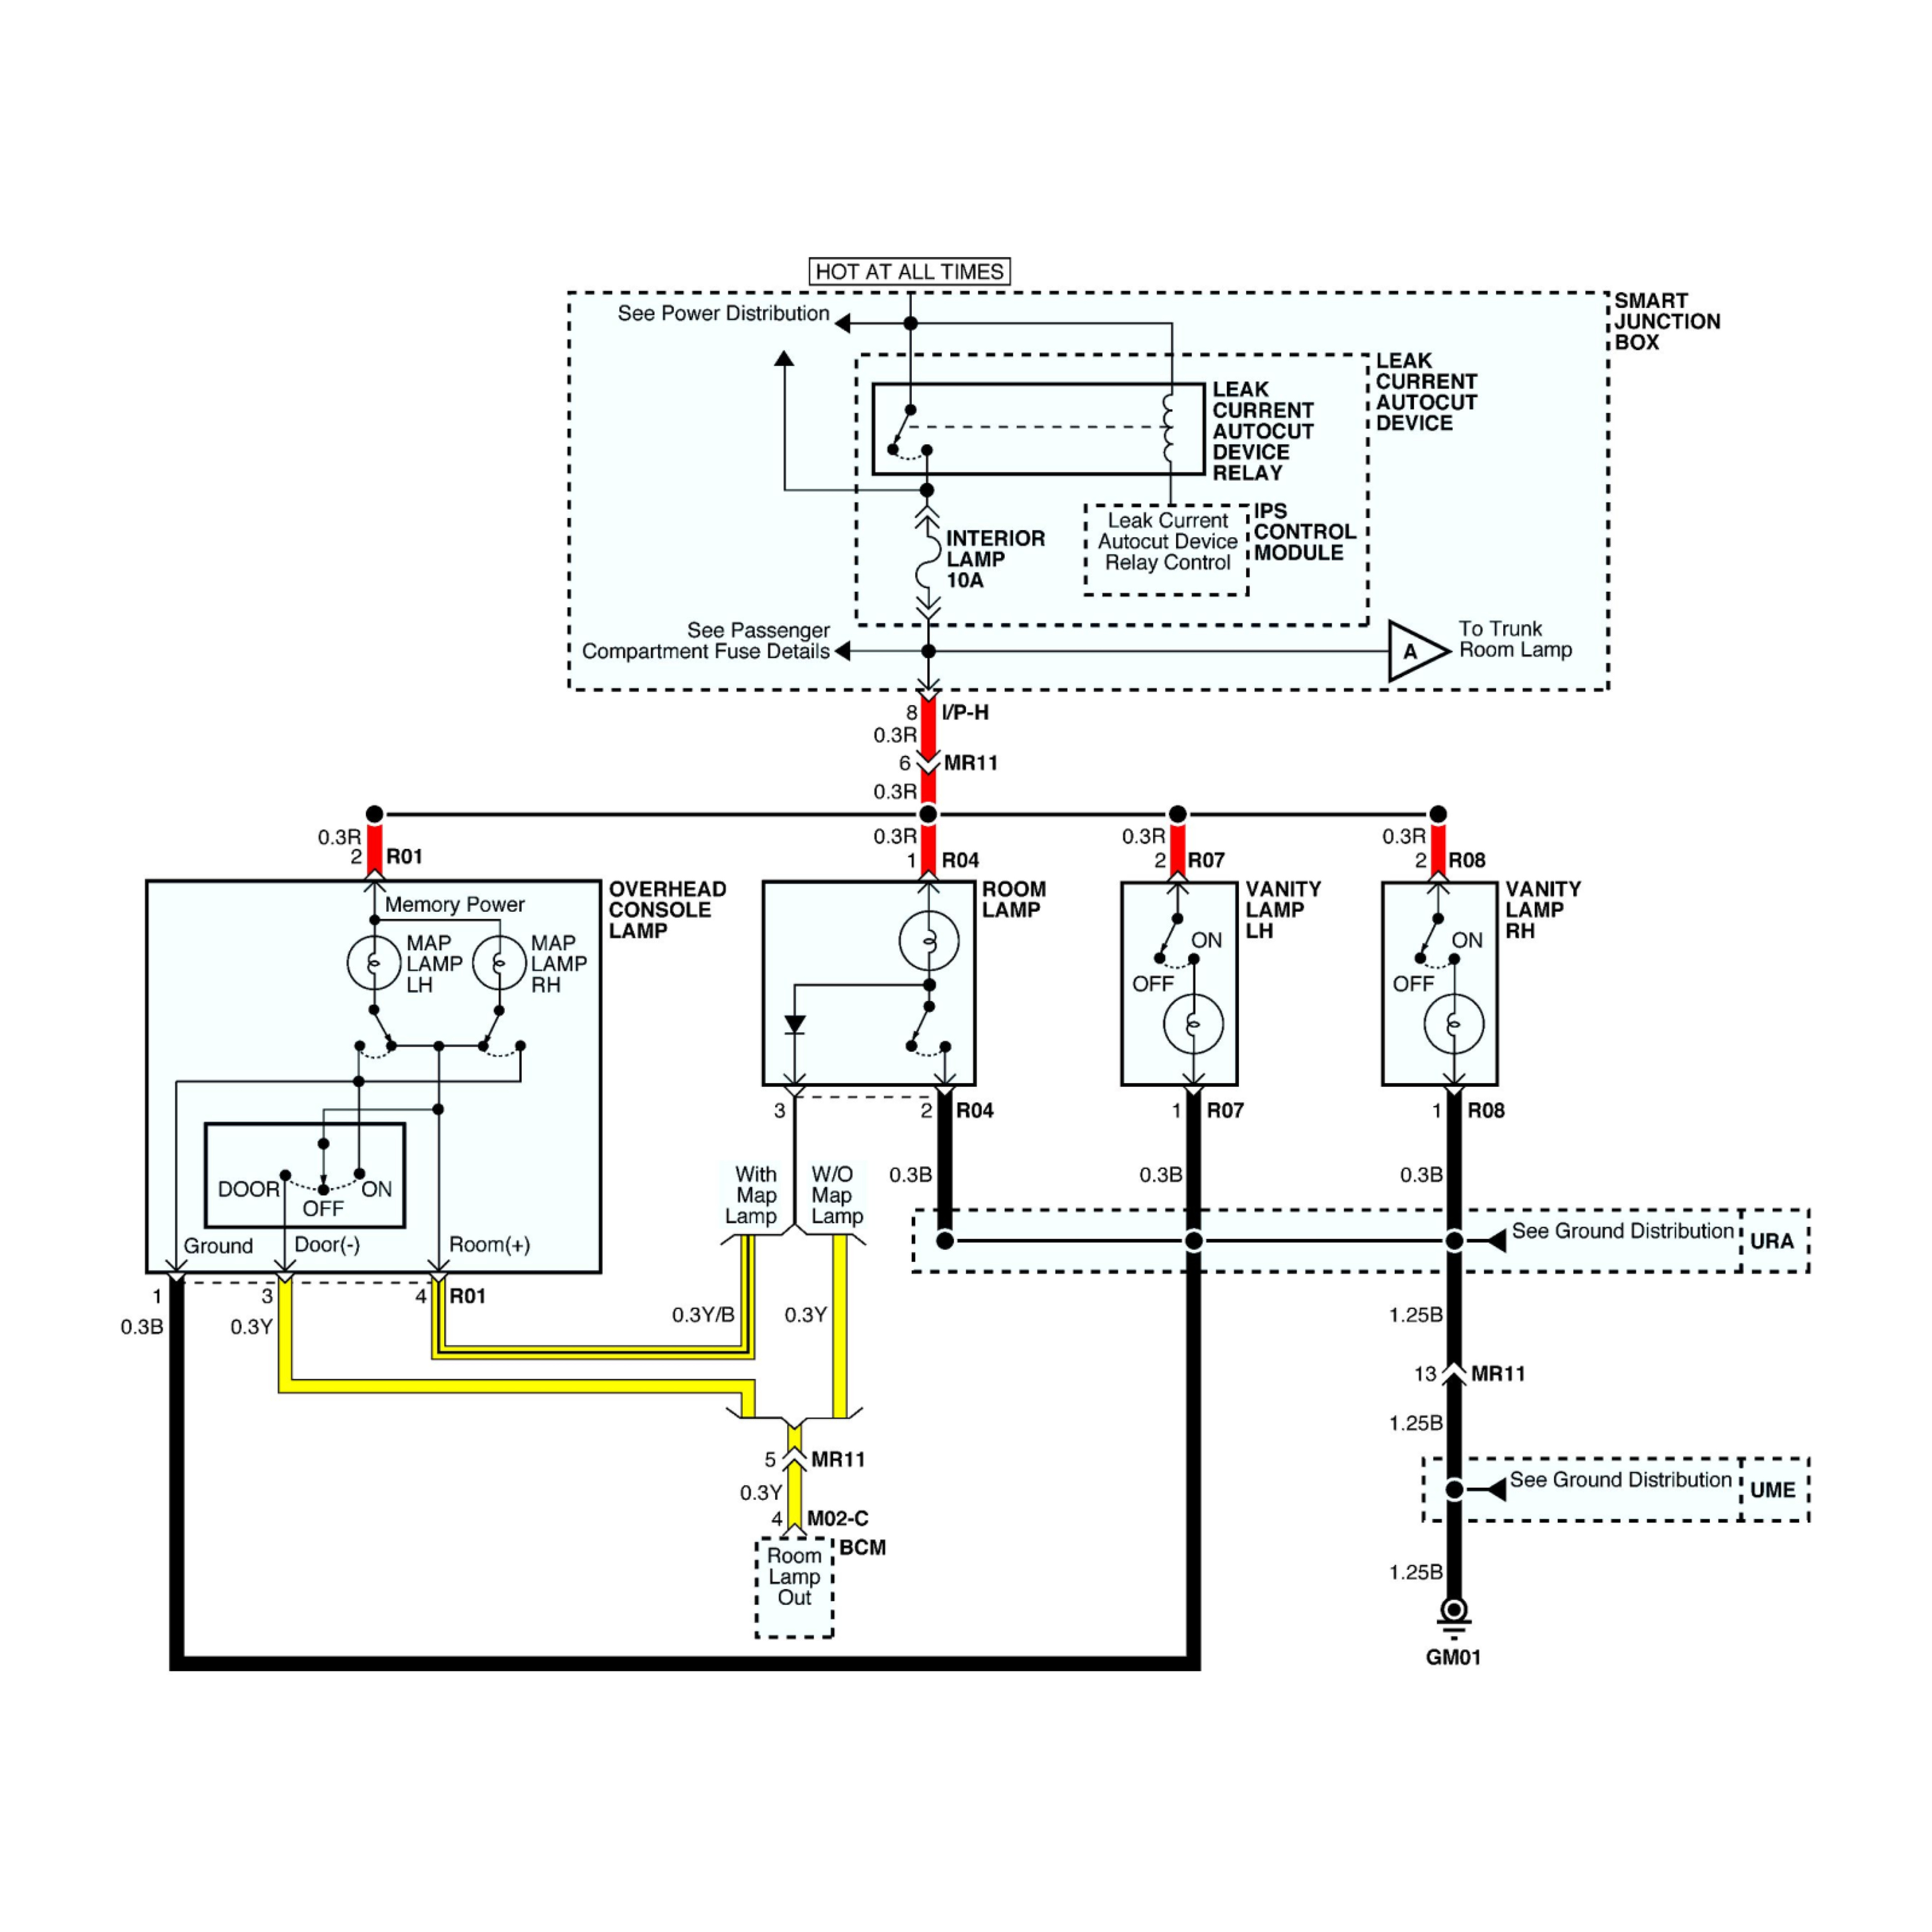 2009 Volkswagen GTI wiring diagrams example